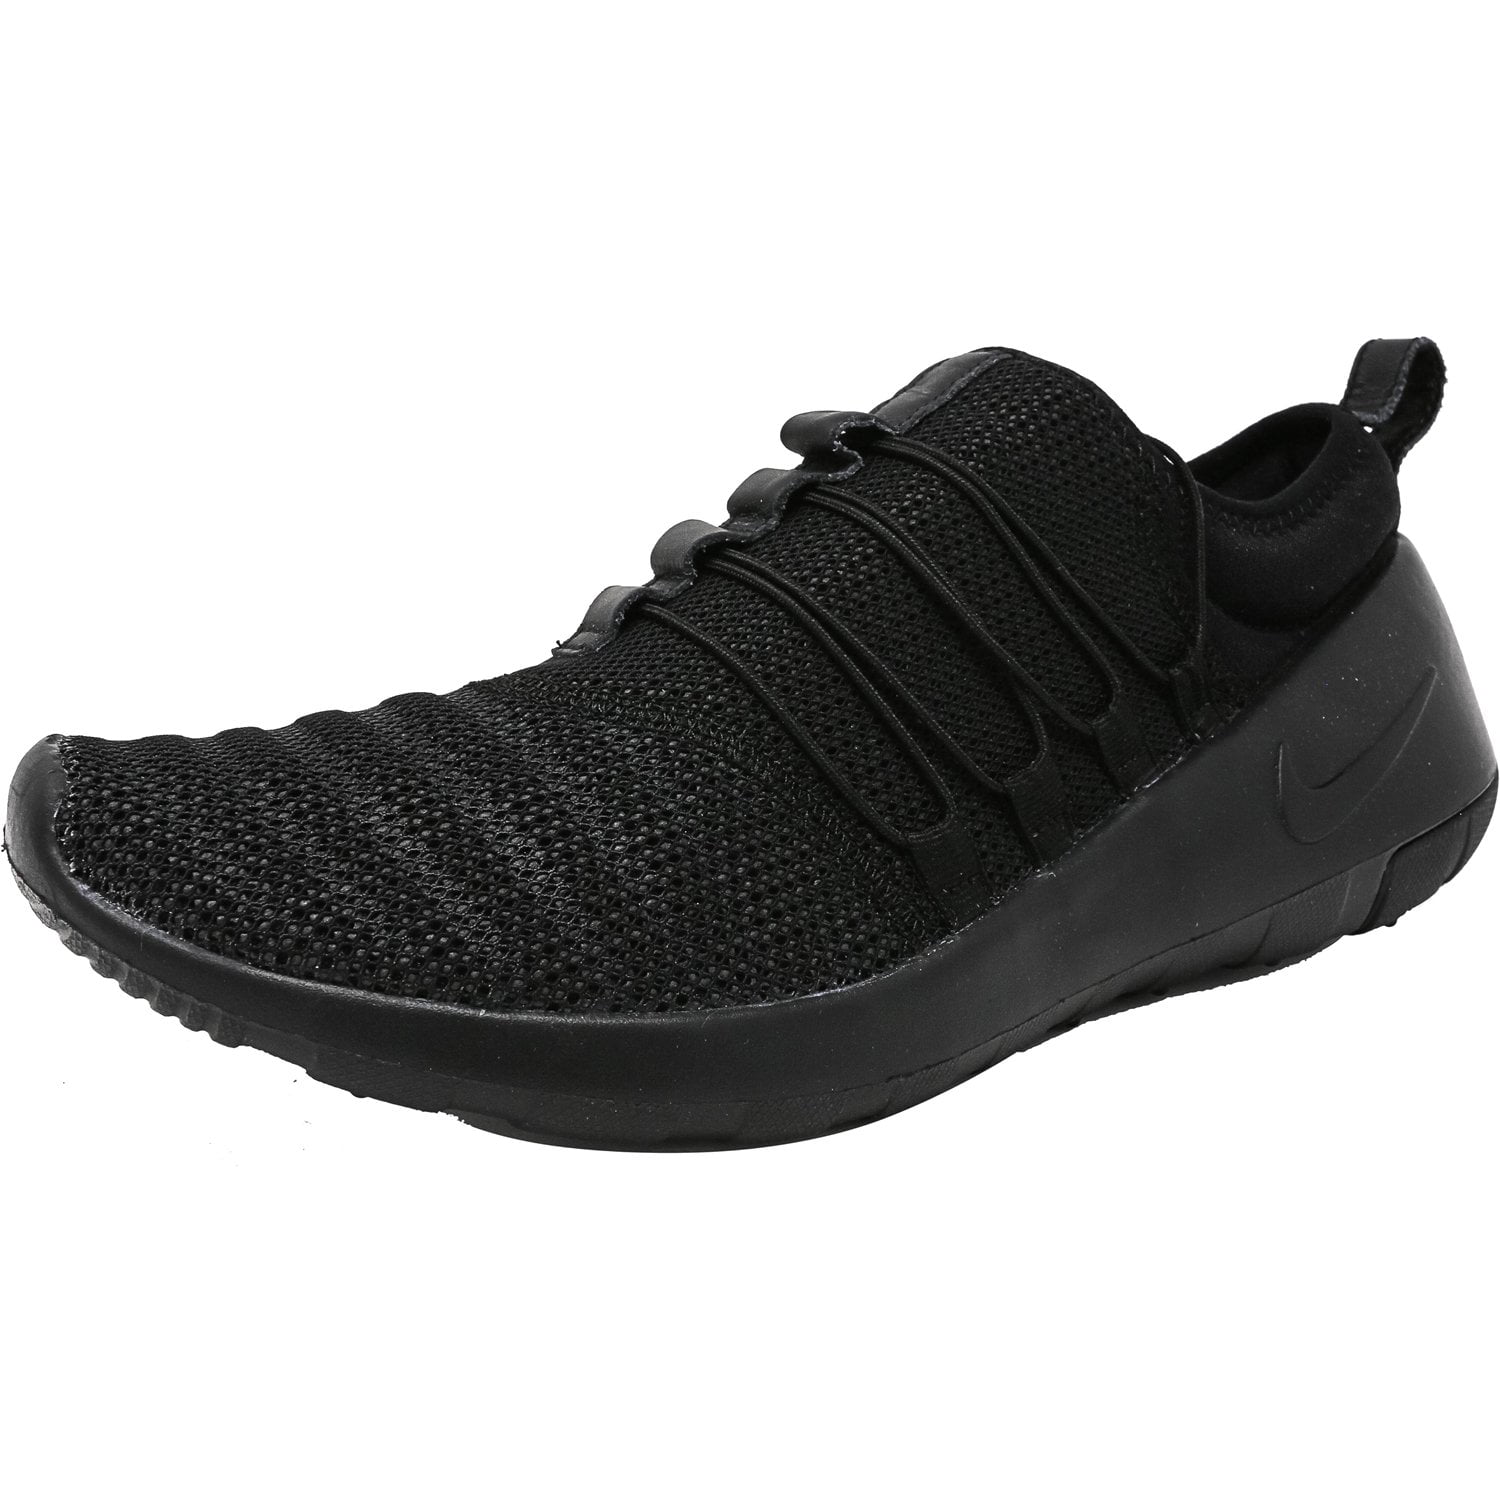 Nike Men's Payaa Premium Qs Black / Cross Trainer Shoe - 11M - Walmart.com